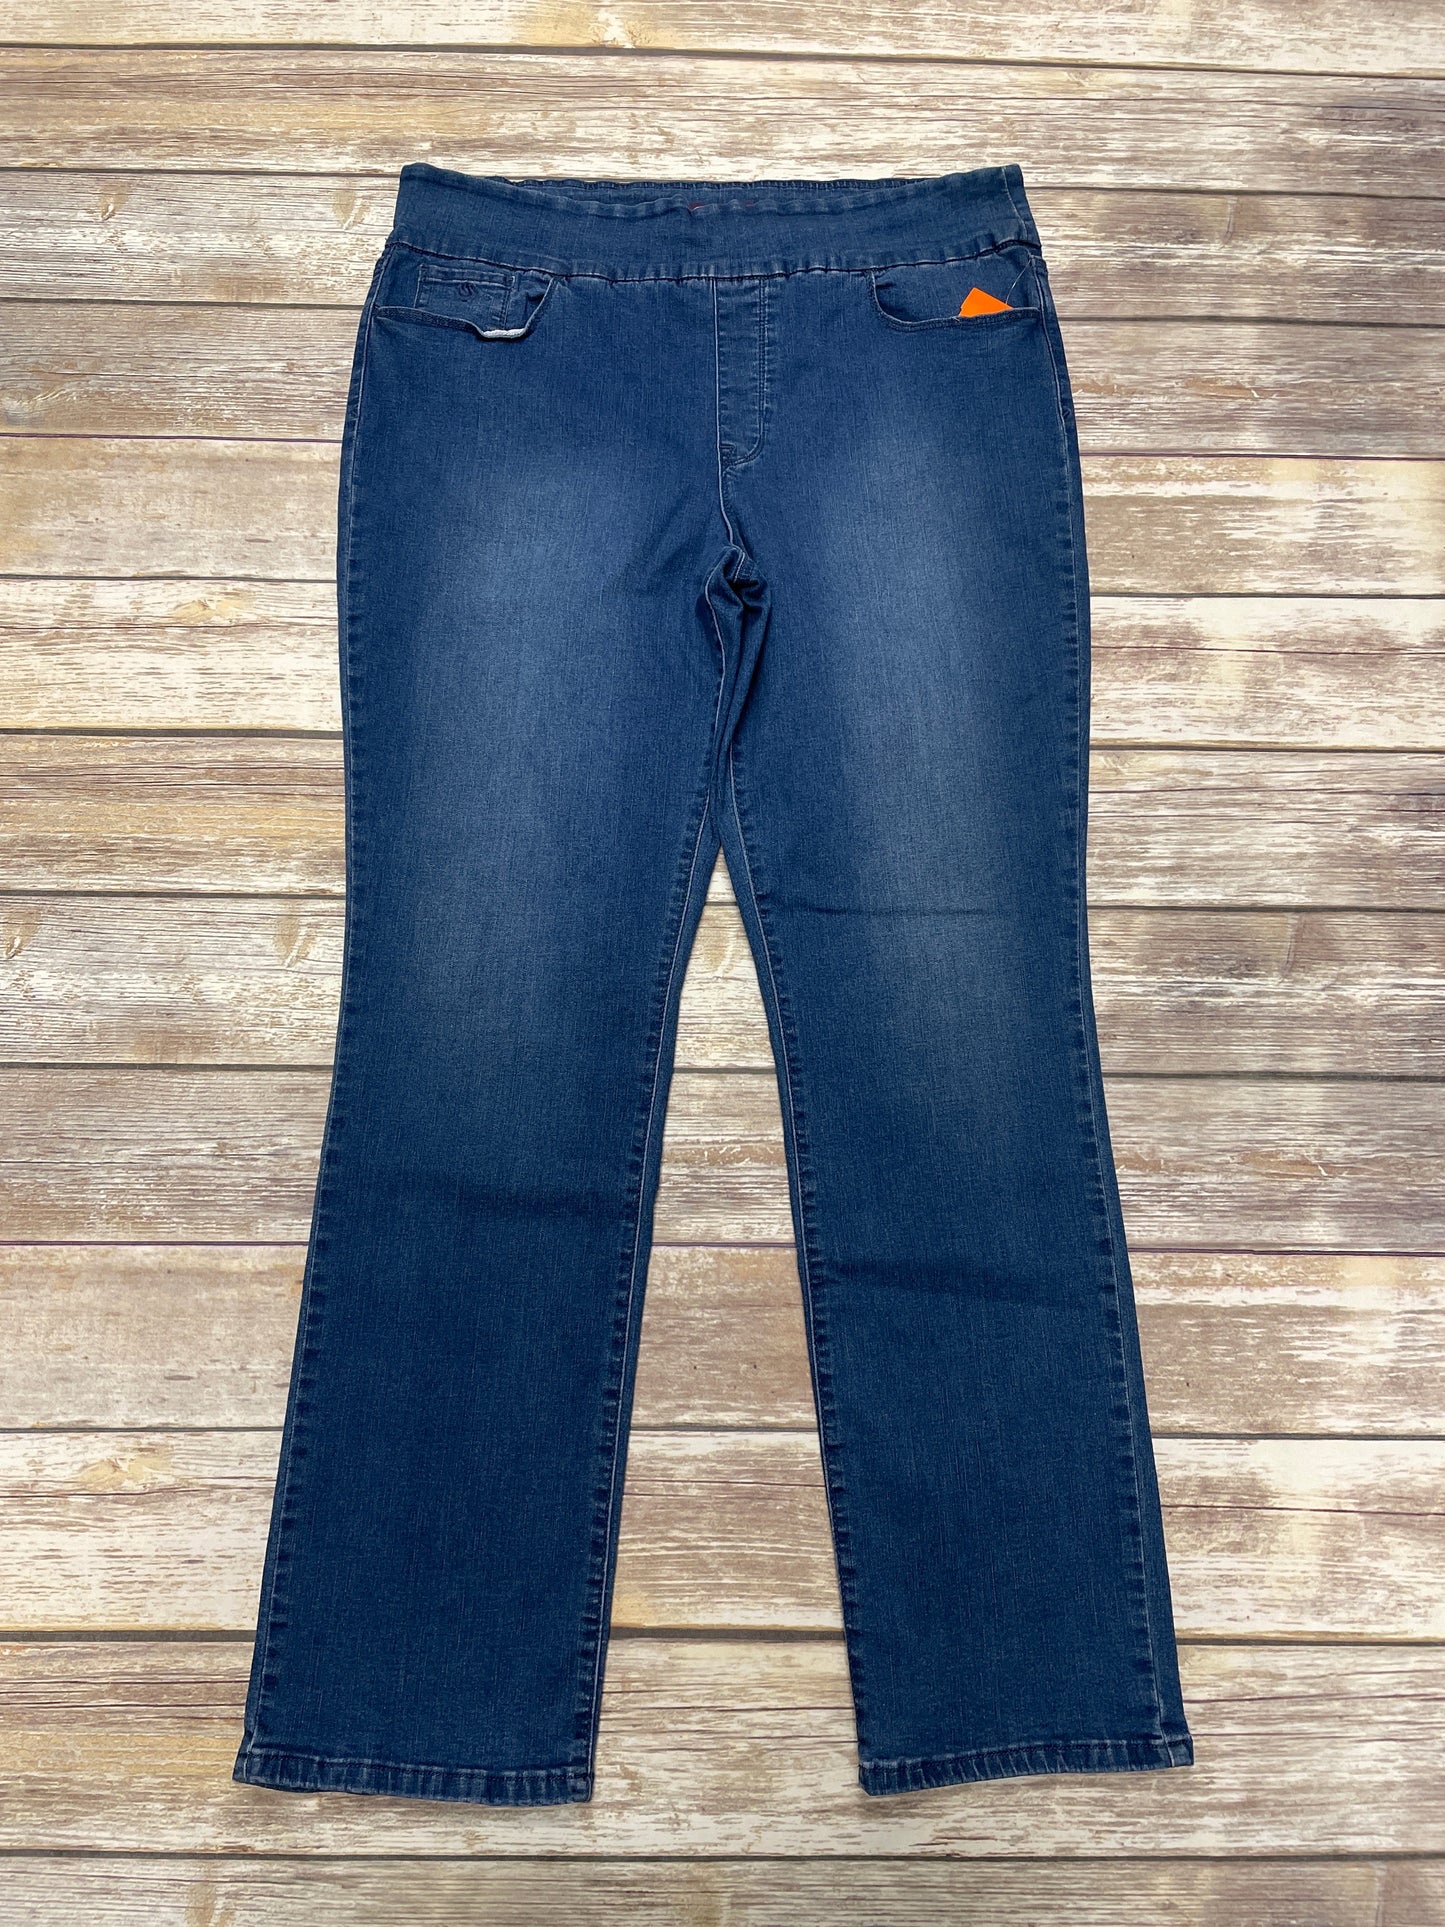 Jeans Straight By Gloria Vanderbilt  Size: 18